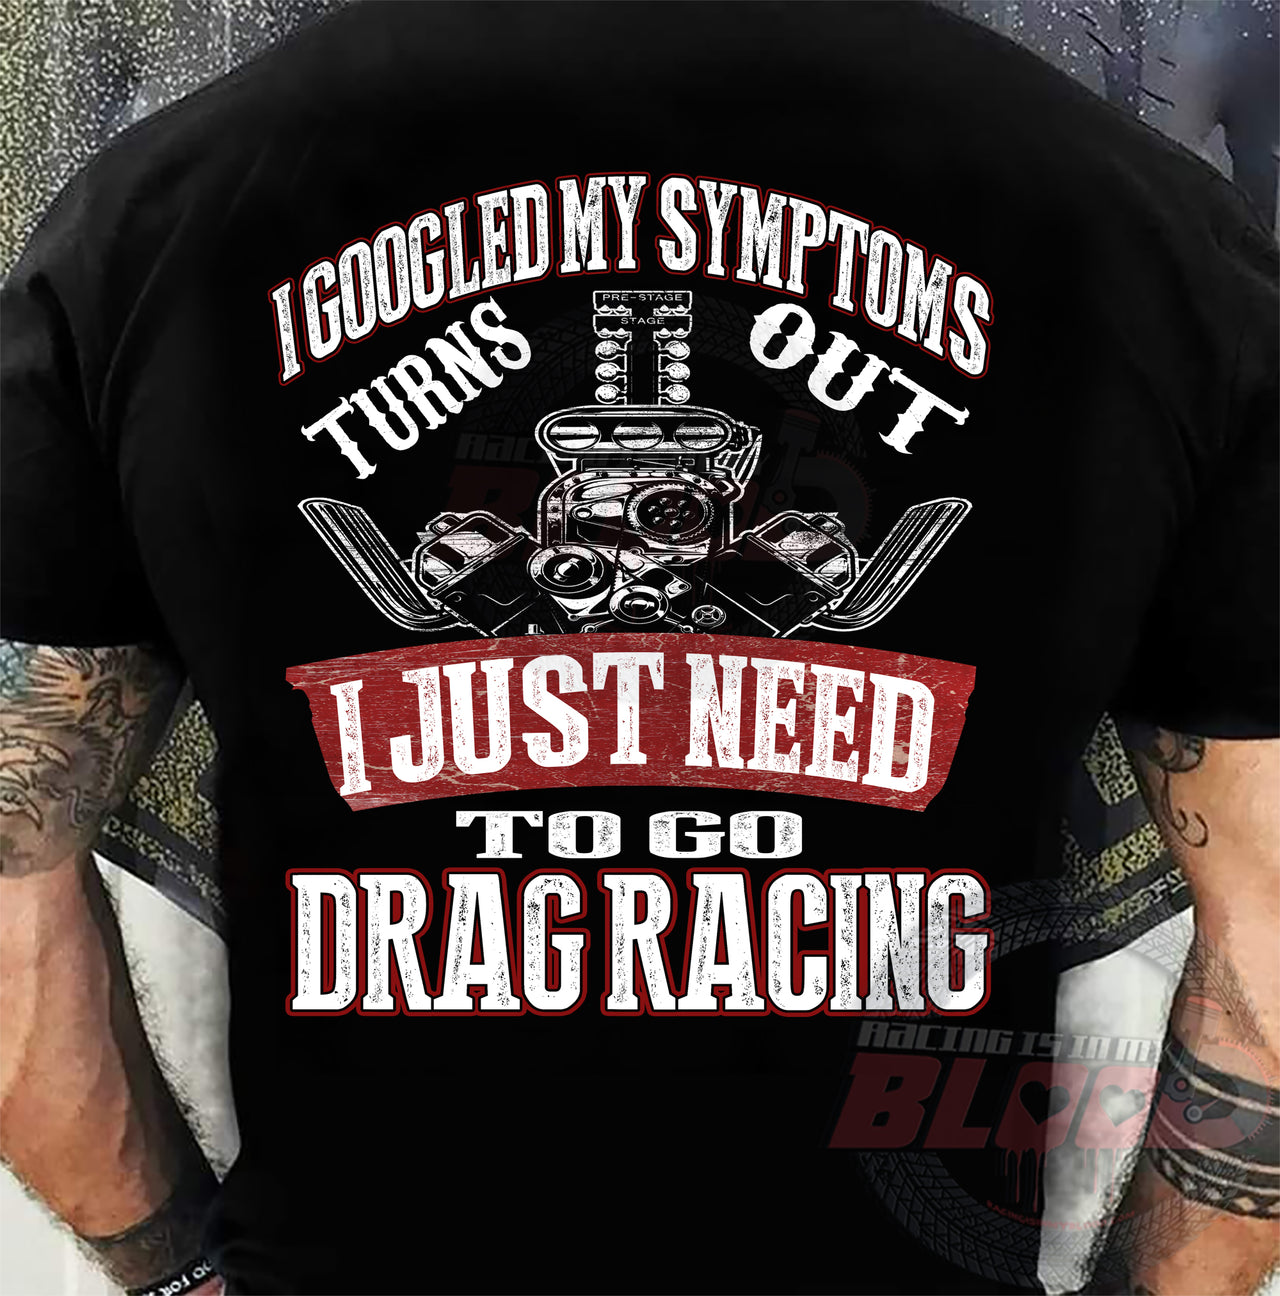 drag racing t shirts